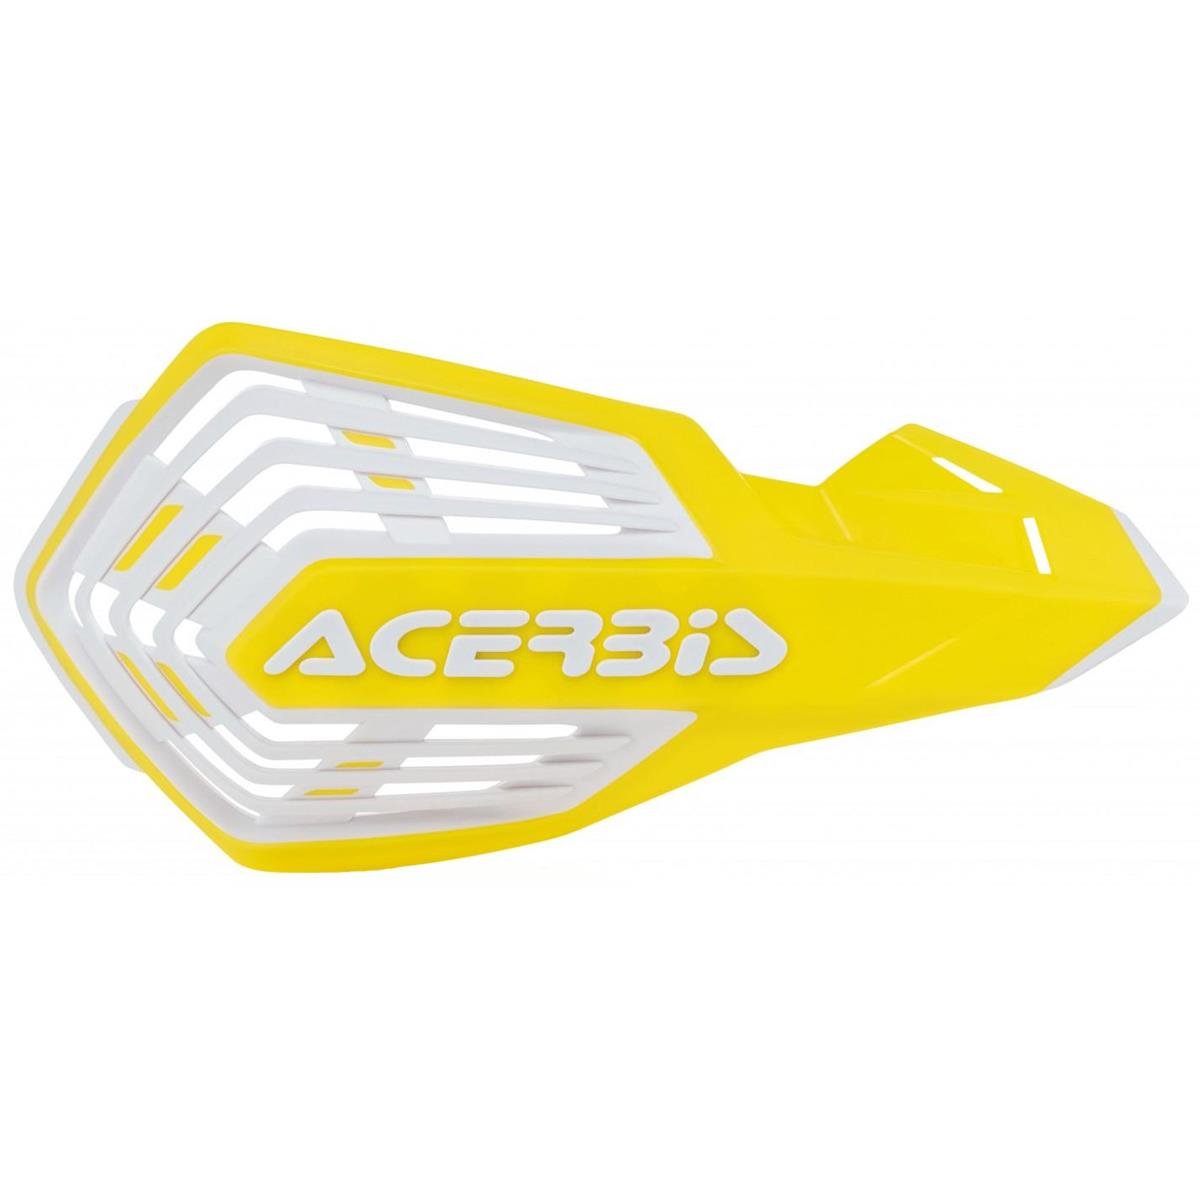 Acerbis Handguards X-Future Yellow/White, Incl. Mounting Kit